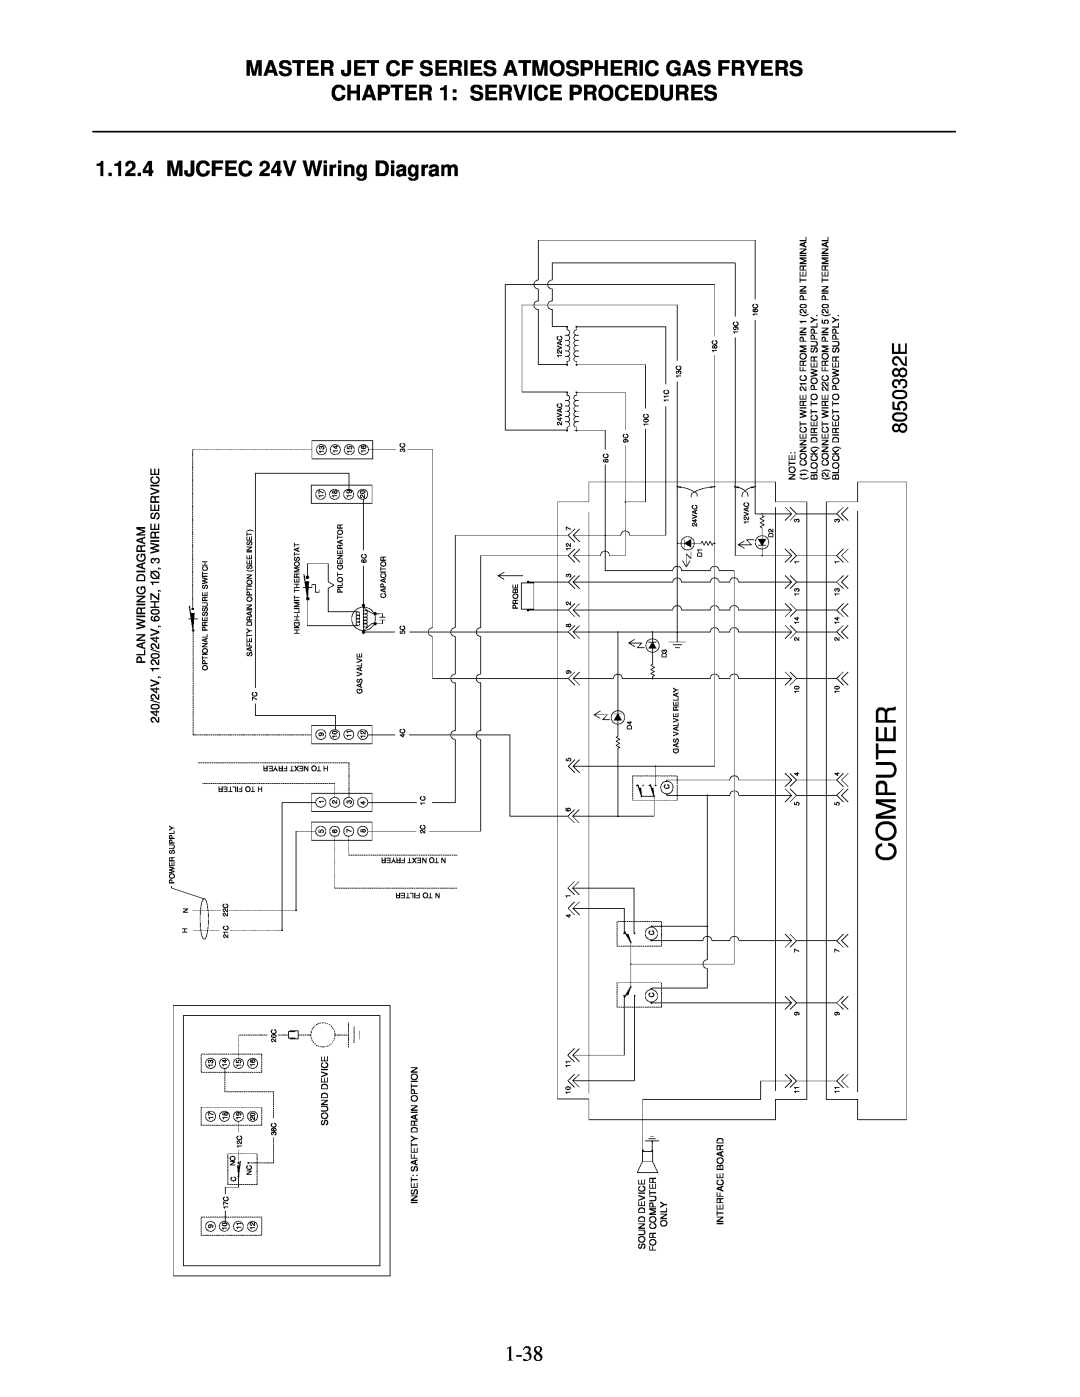 Frymaster J65X, FMCFEC, KJ3FC 1.12.4, MJCFEC 24V Wiring Diagram, COMPUTER8050382E, Master Jet Cf Series Atmospheric Service 